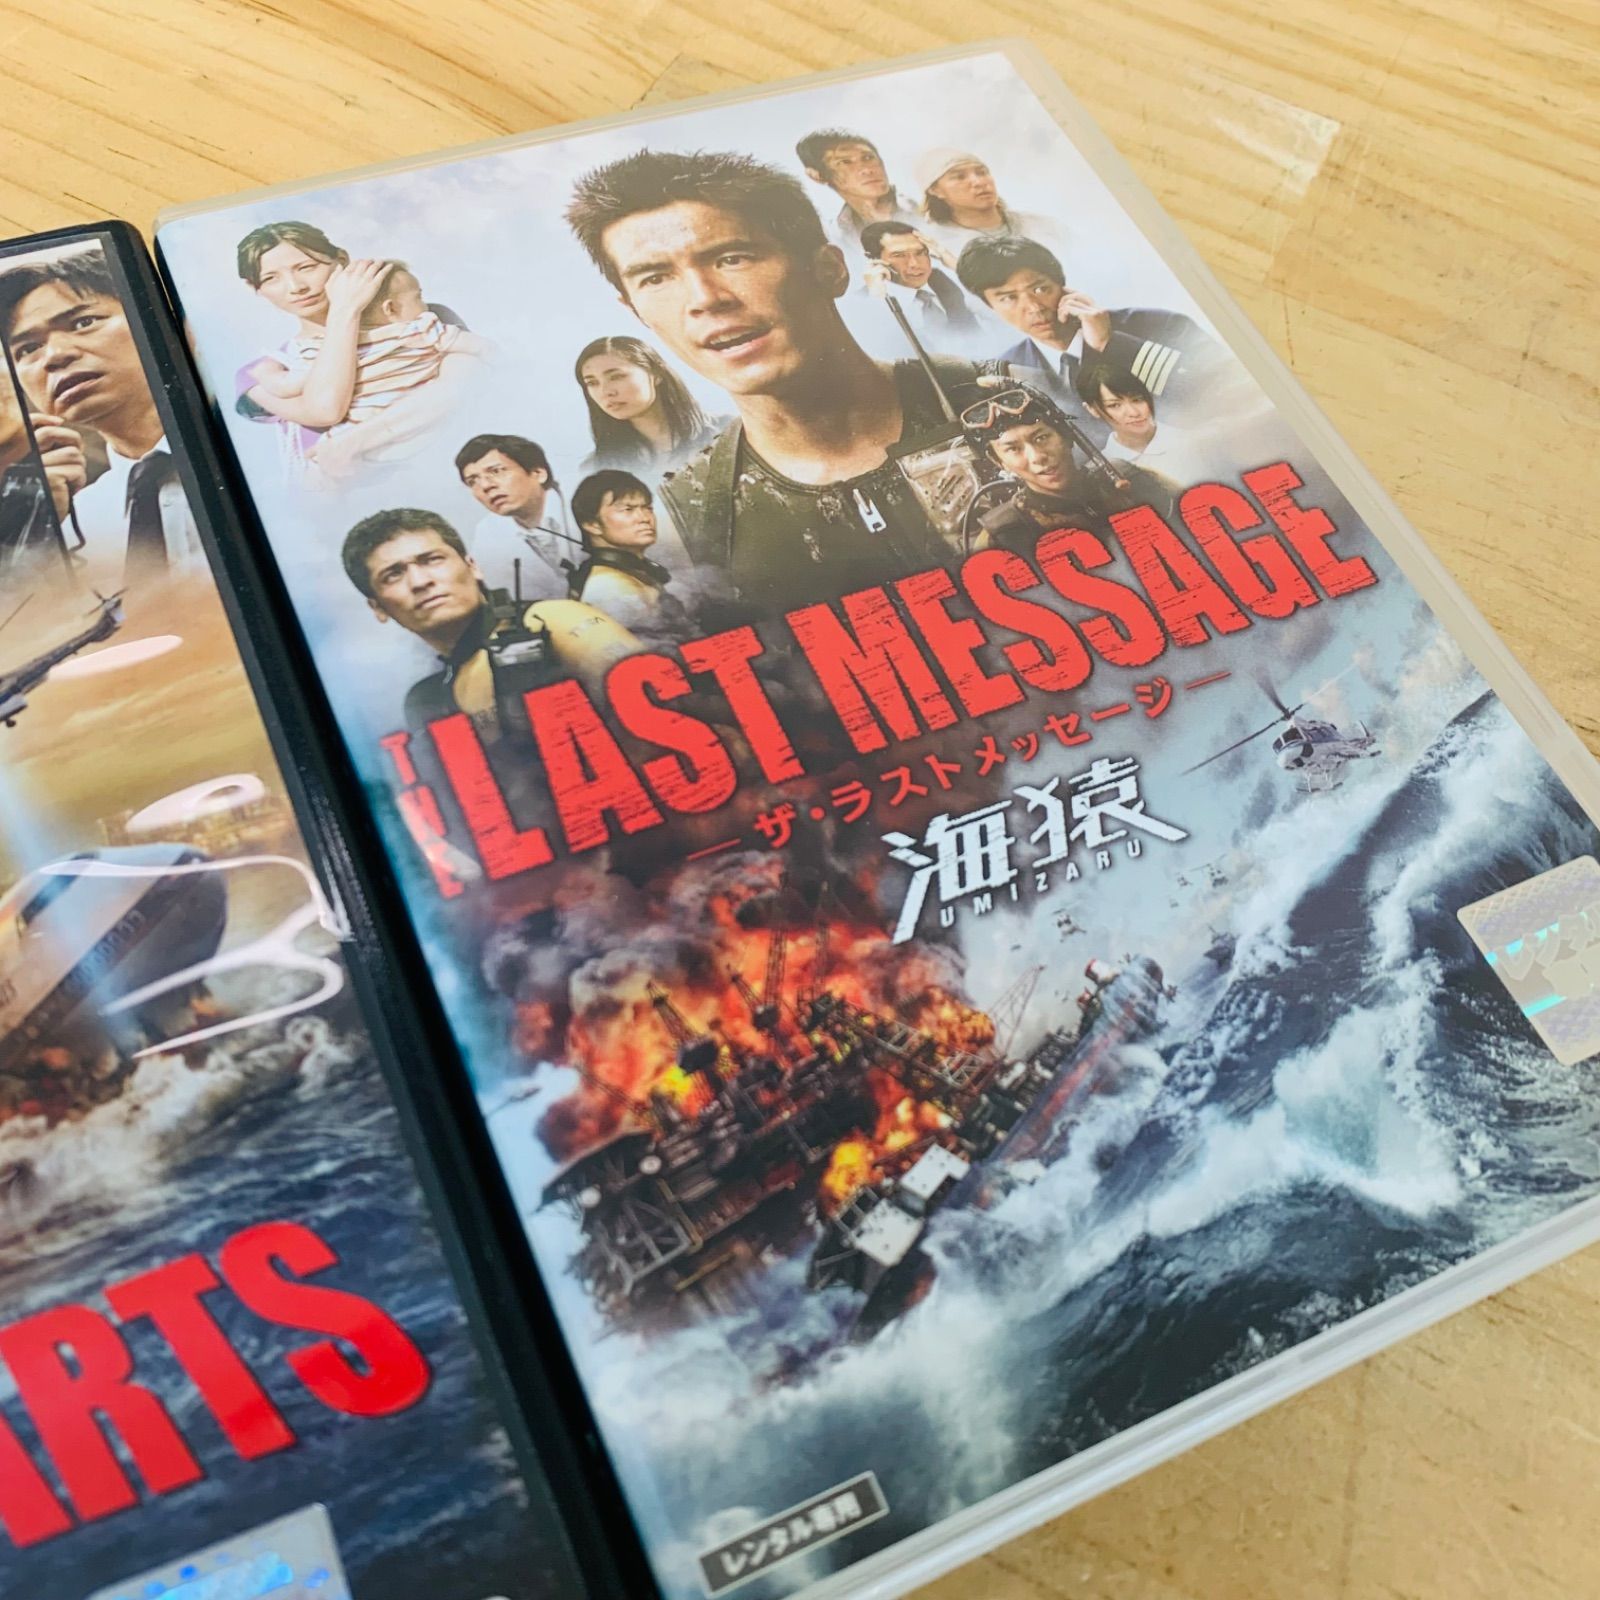 ★I31700-40 THE LAST MESSAGE BRAVE HEARTS 海猿 DVD レンタルアップ 2本セット